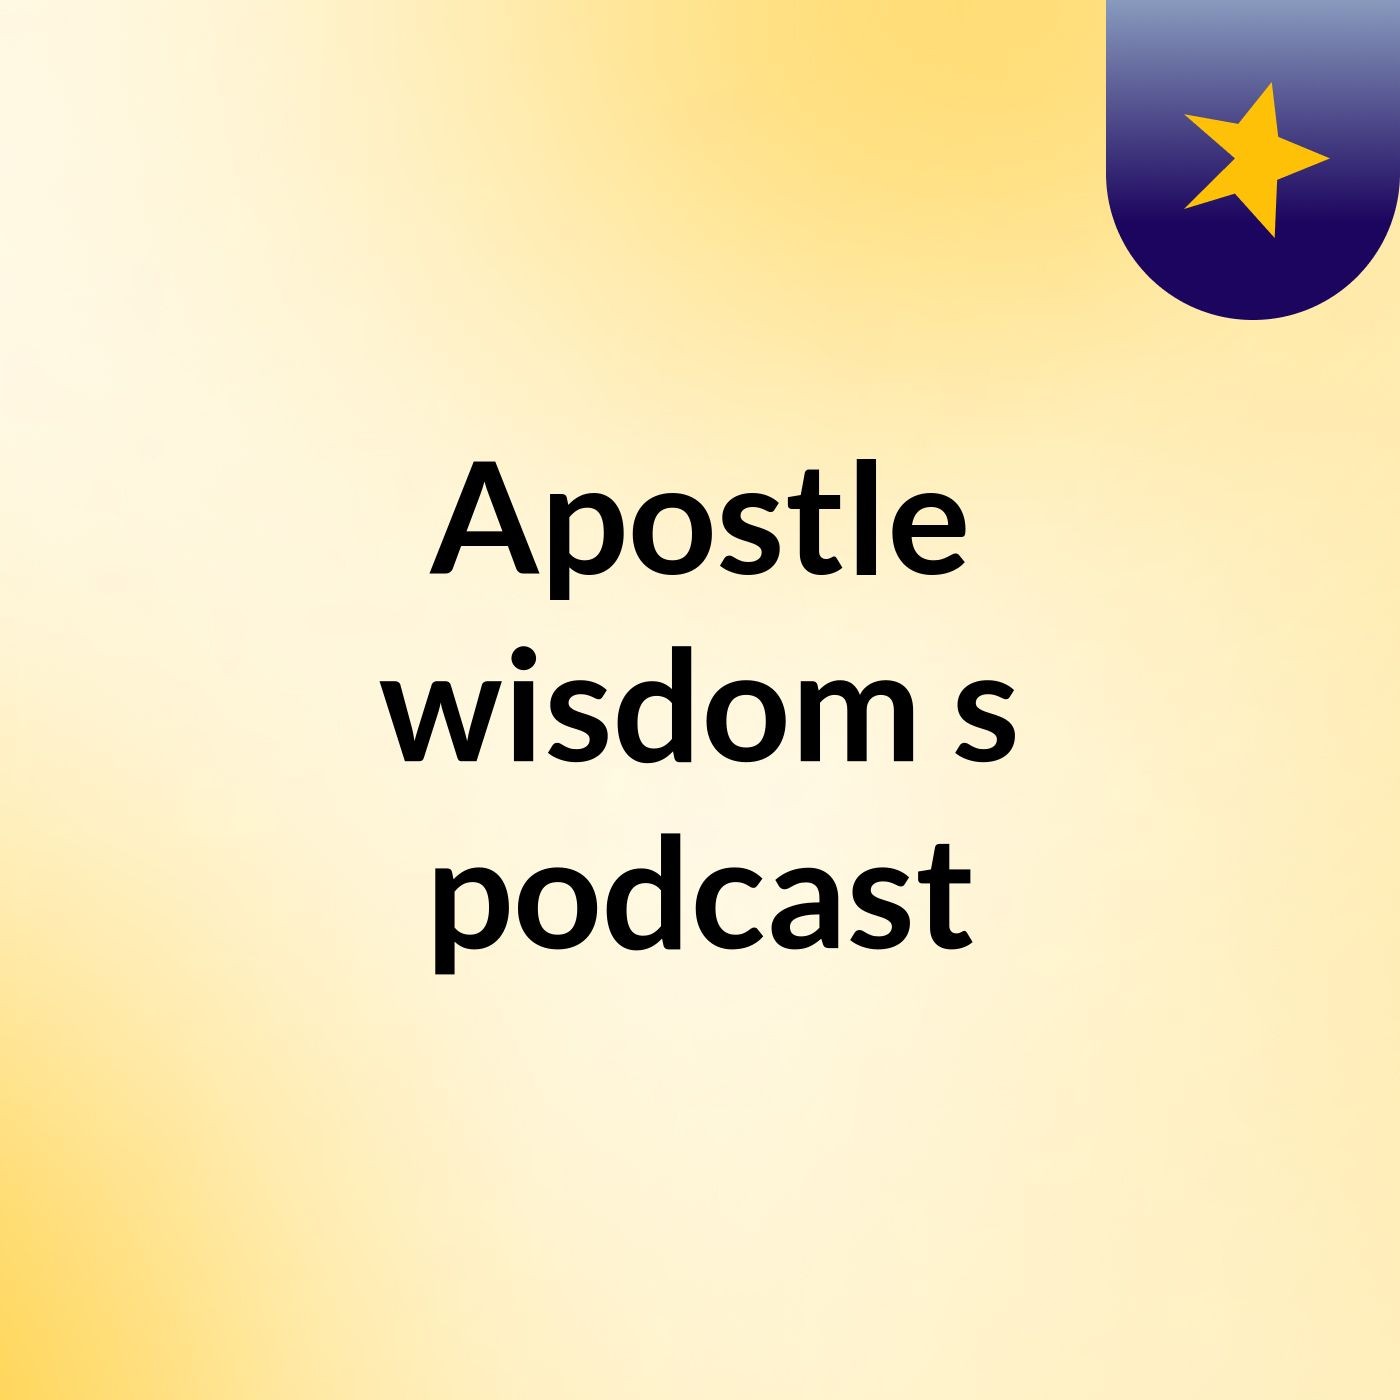 Apostle wisdom's podcast